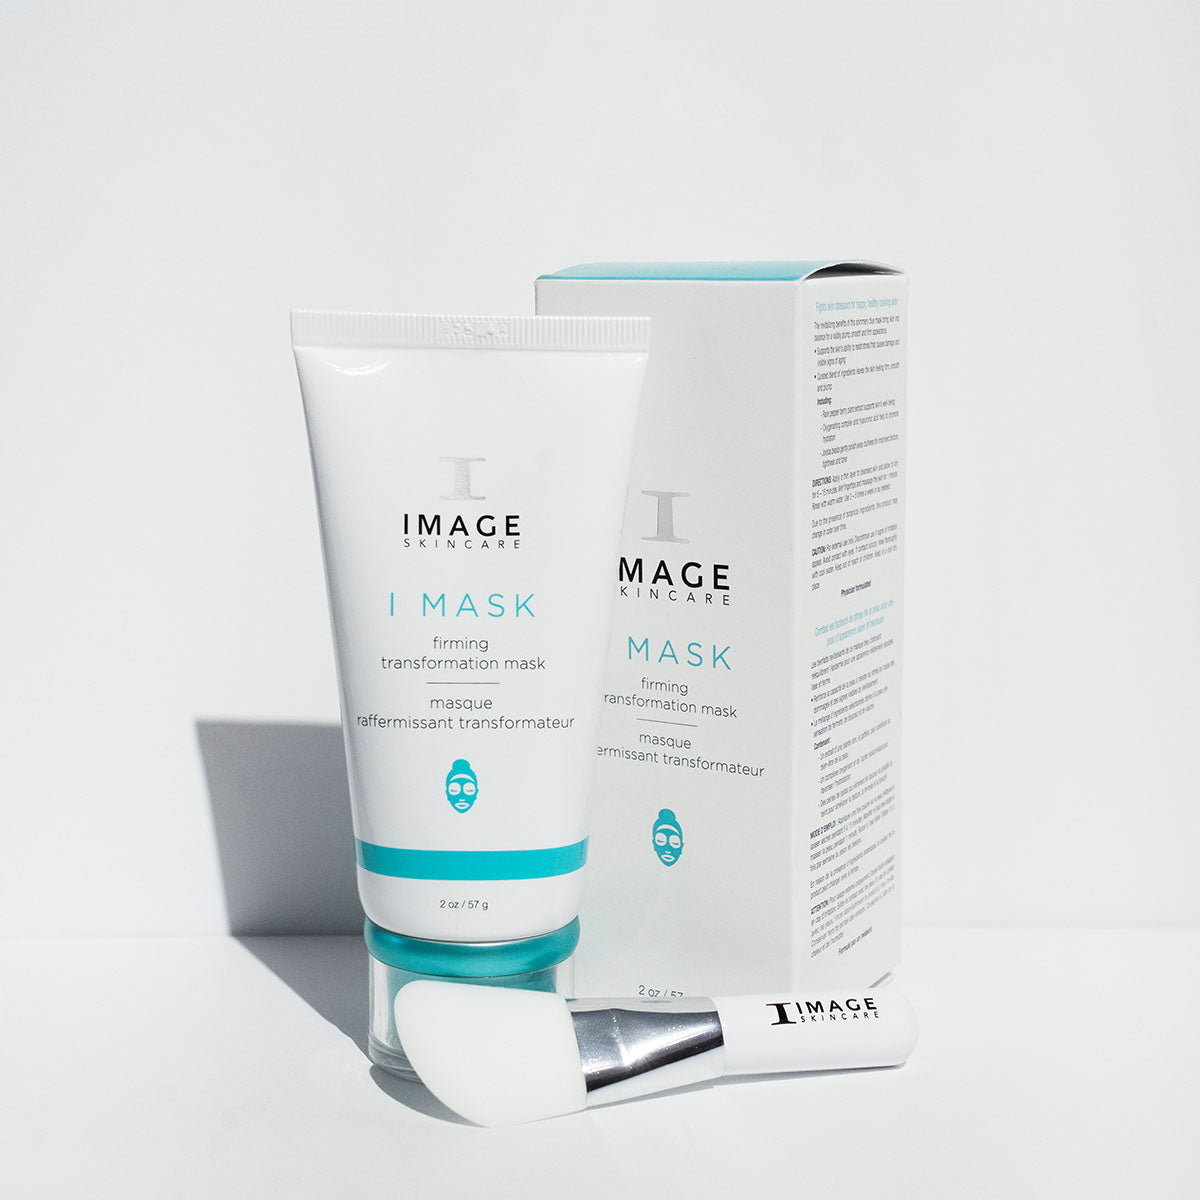 I MASK firming transformation mask | IMAGE Skincare